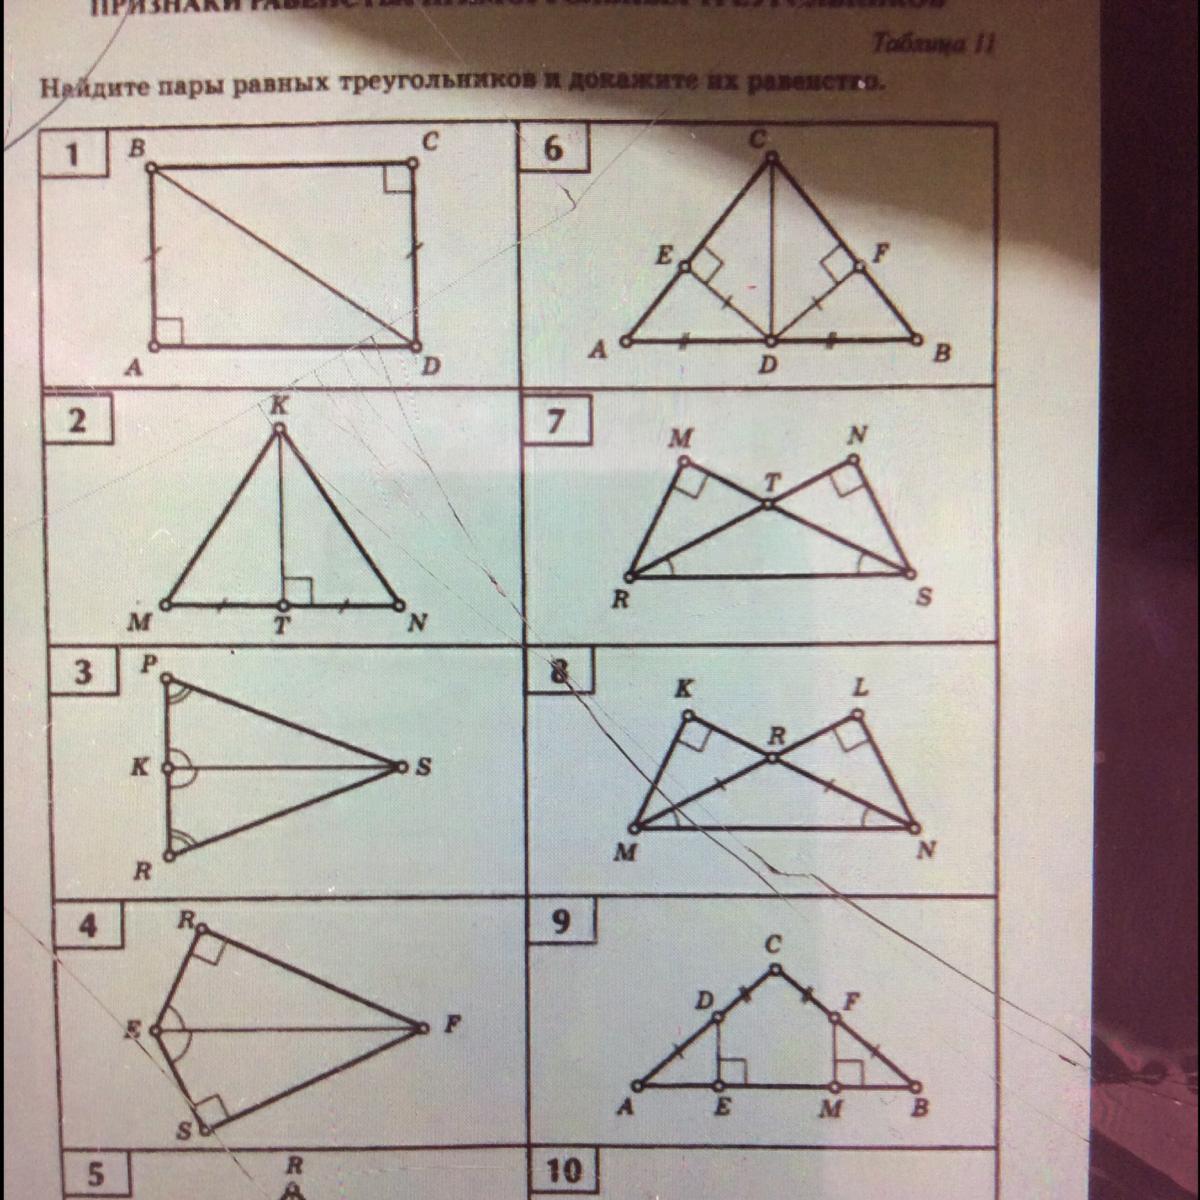 Тест треугольники признаки равенства треугольников ответы. Признаки равенства прямоугольных треугольников задачи. Задания по признакам равенства прямоугольных треугольников 7 класс. Равенство прямоугольных треугольников задачи на готовых чертежах. Задачи на признаки равенства прямоугольных треугольников 7 класс.